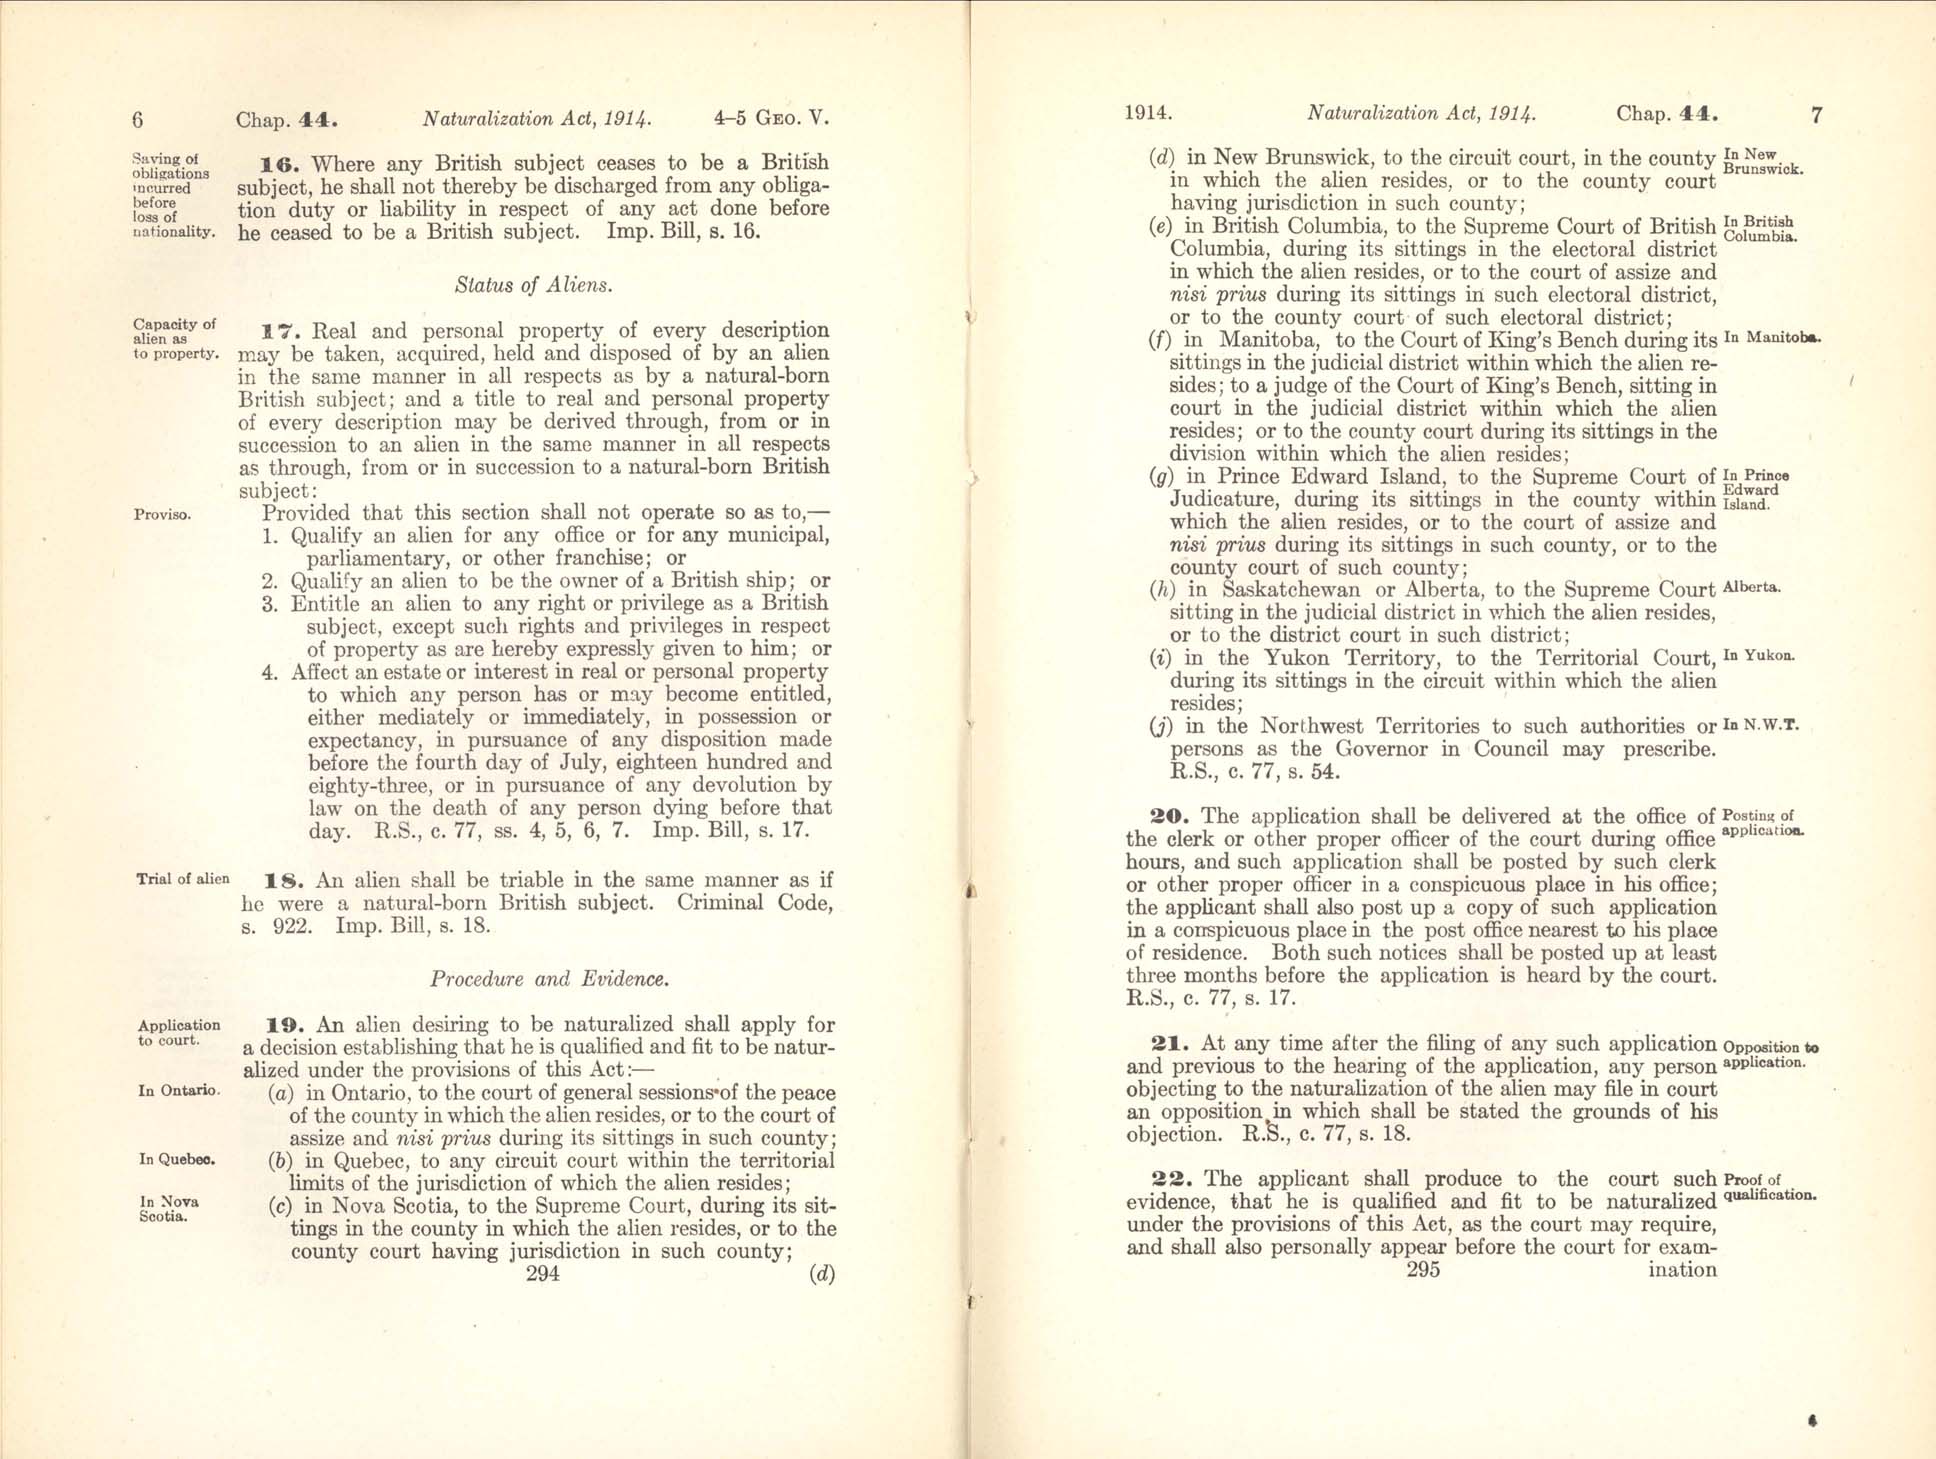 Page 294, 295 Naturalization Act, 1914